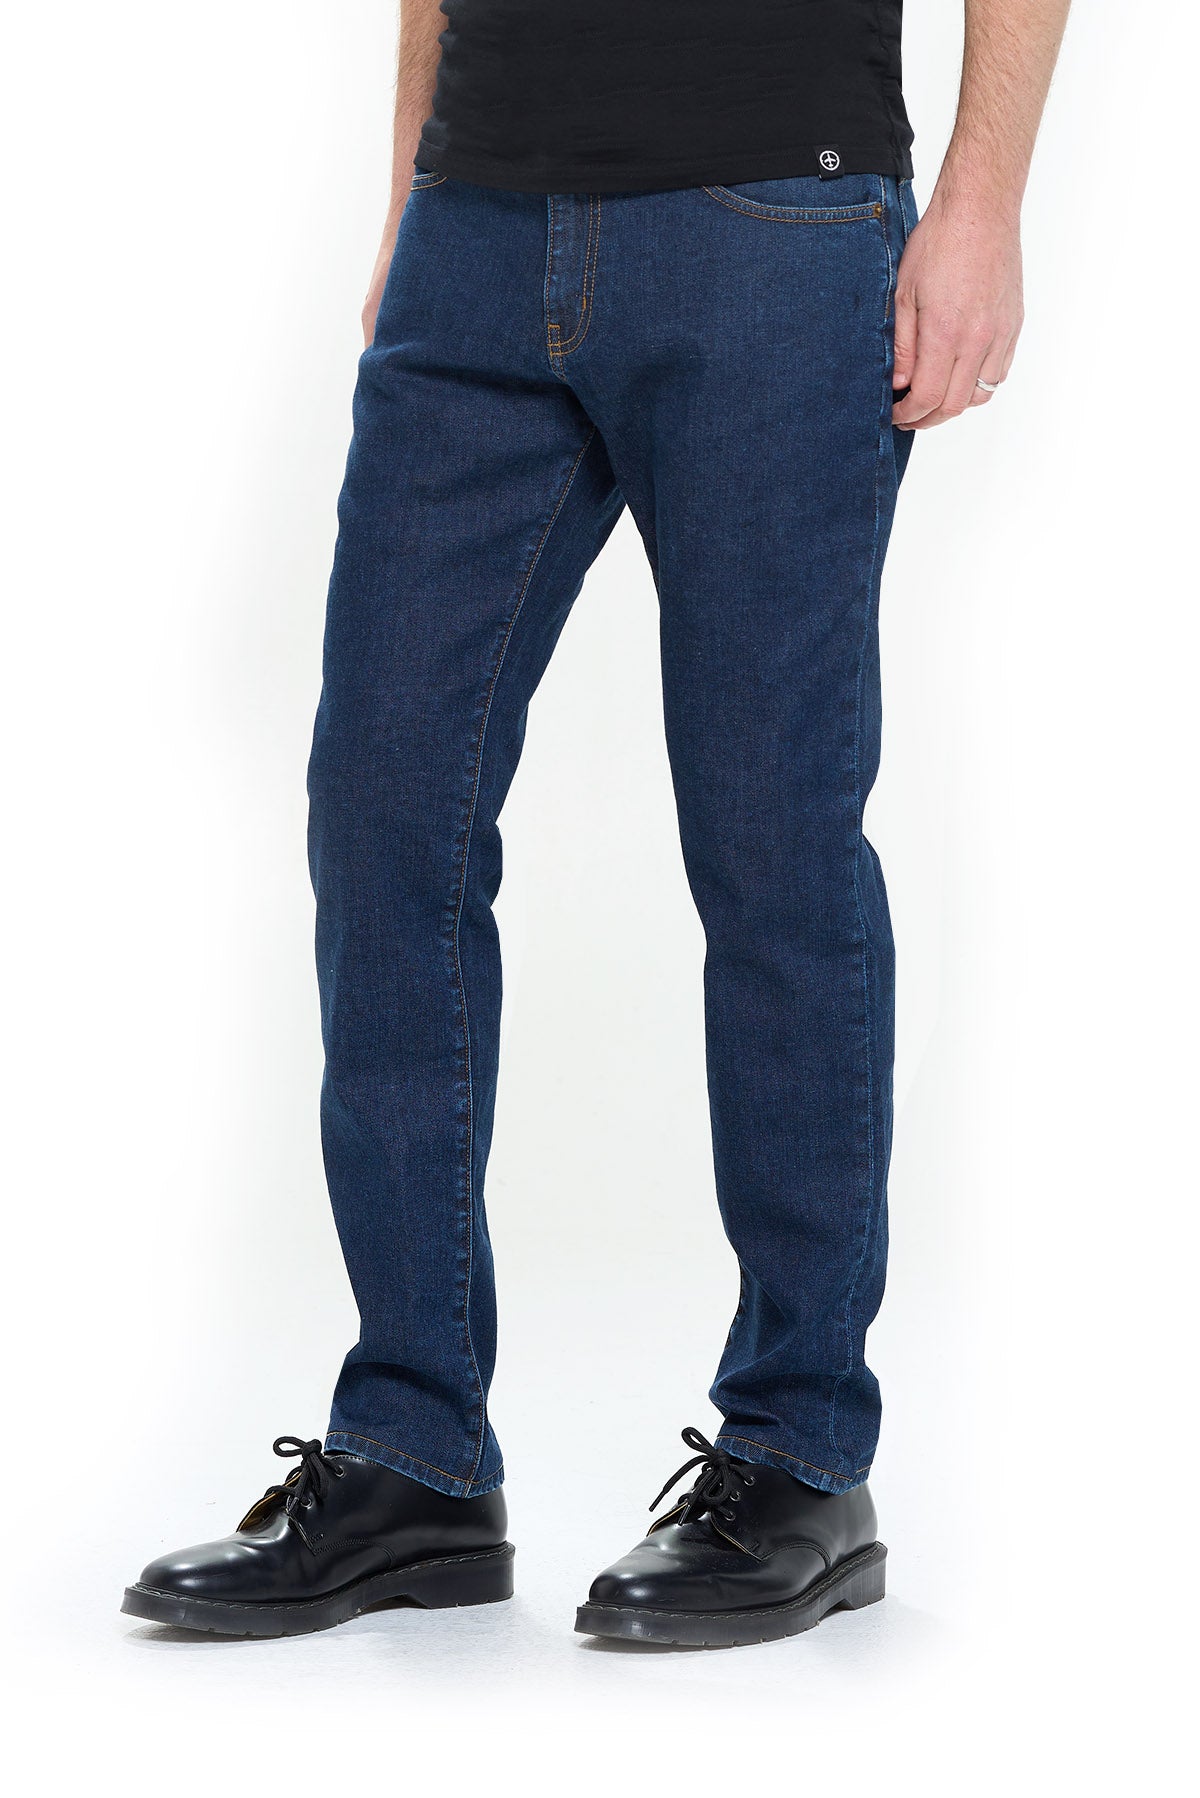 Indigo Blue Jeans, Men's Skinny Jeans